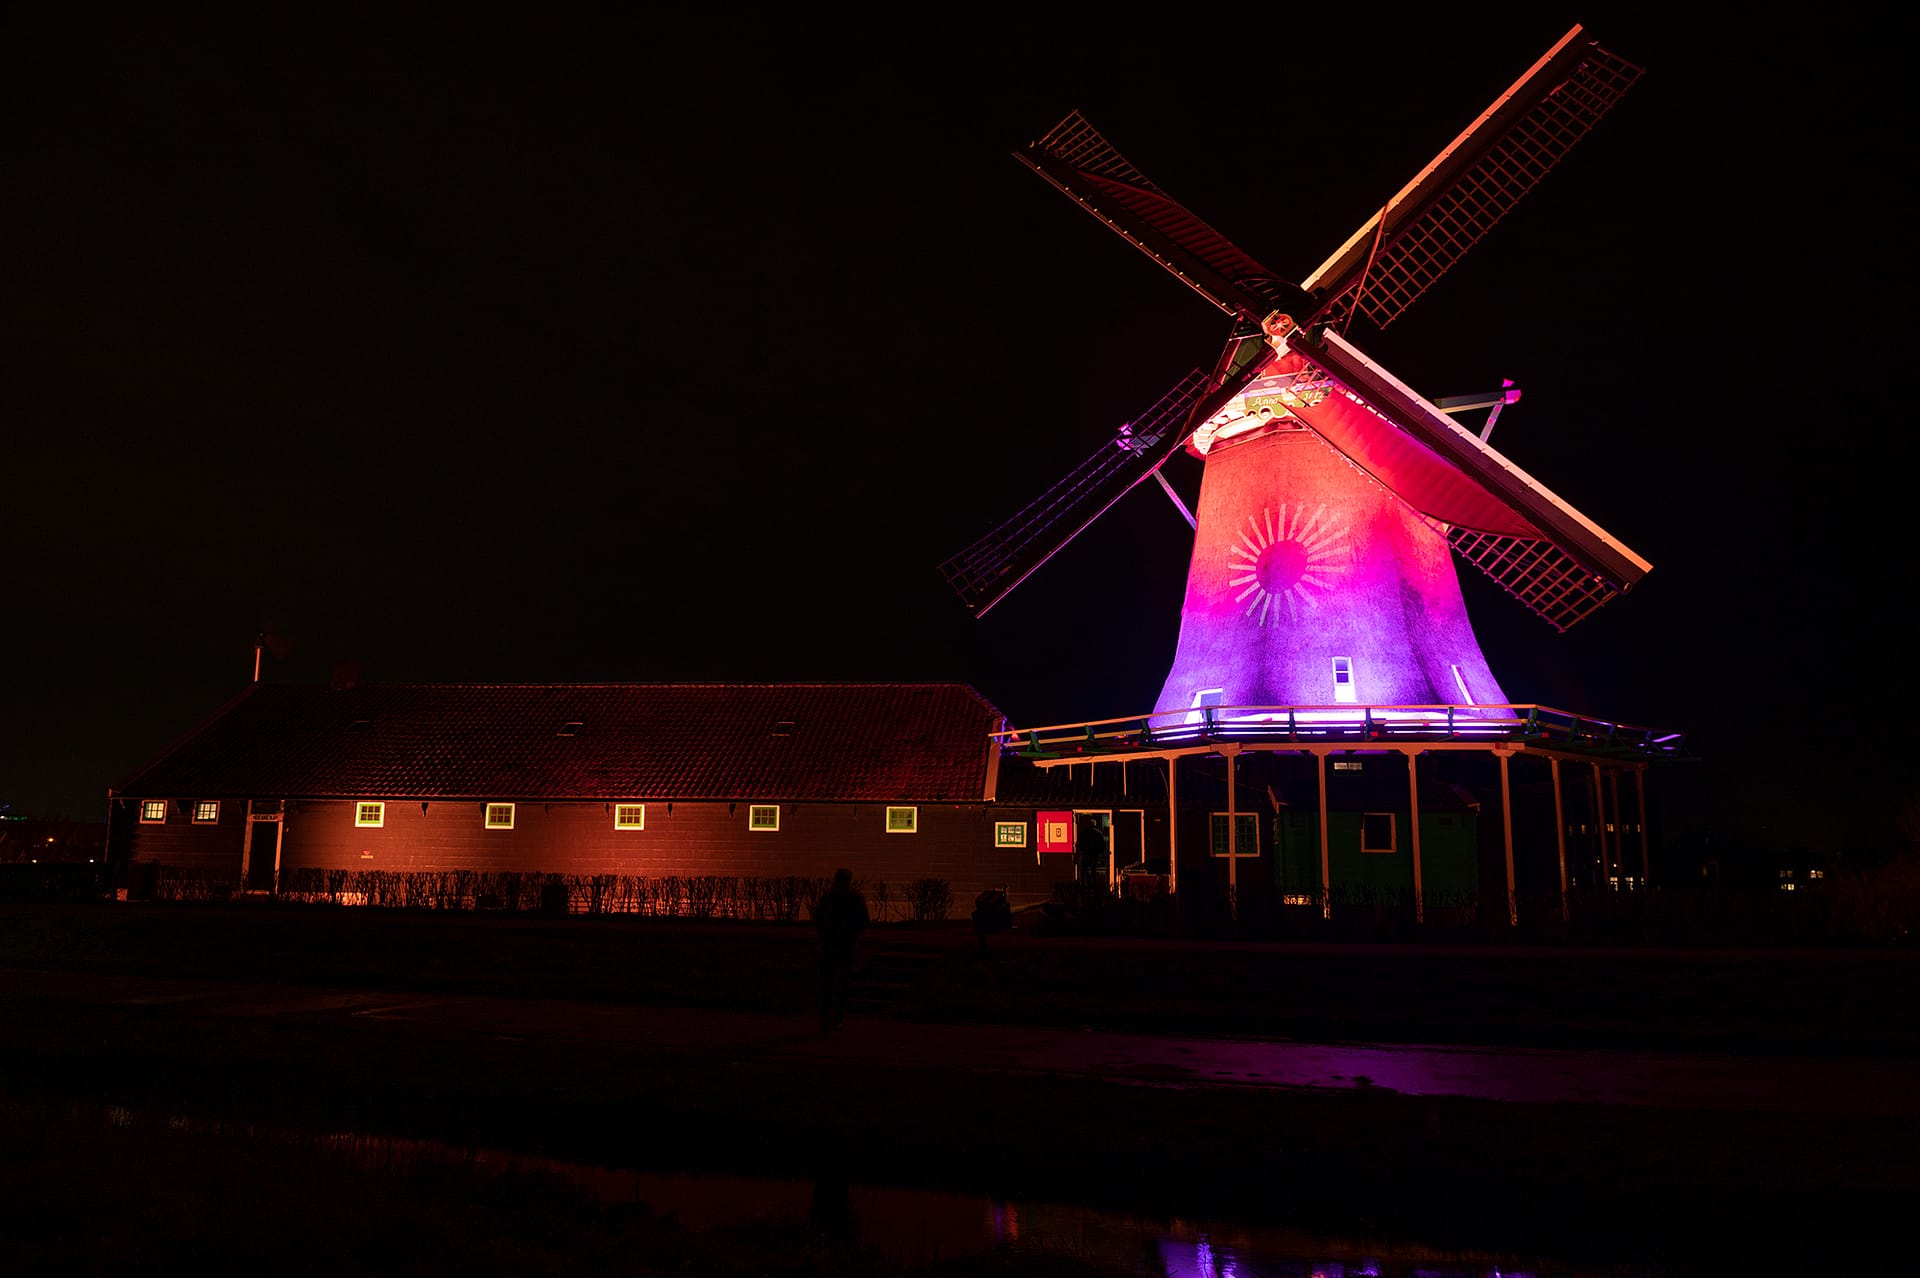 Old Mill de Zoeker, Zaanstad, Netherlands by Ron Koffeman